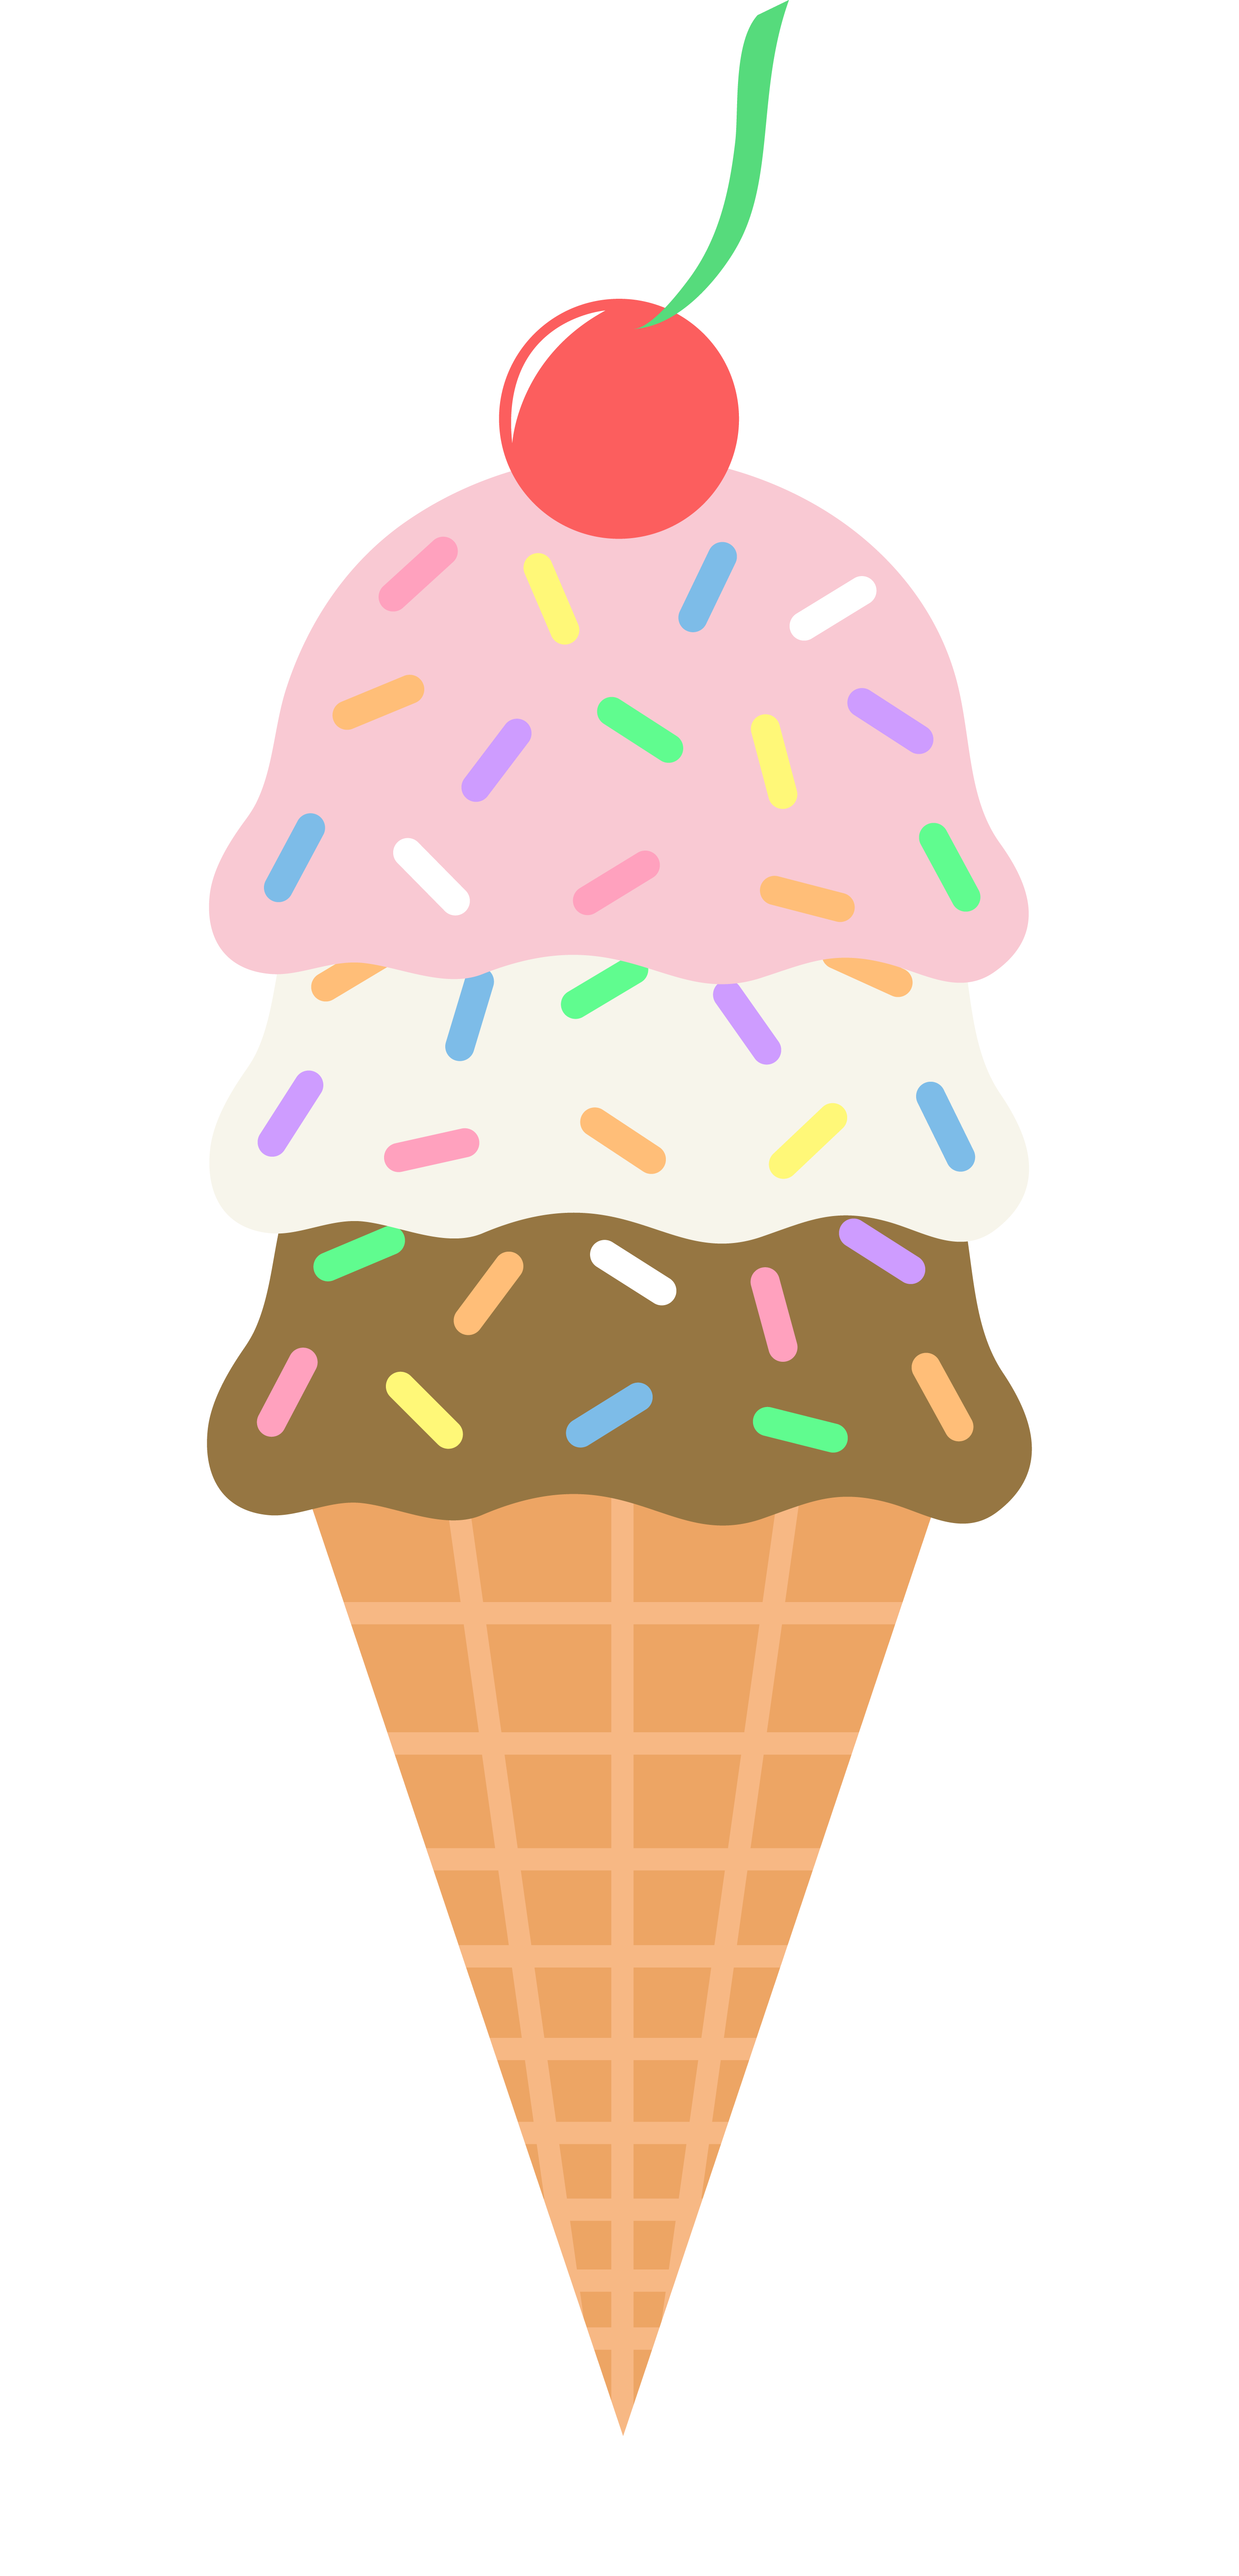 free clipart of ice cream sundae - photo #45